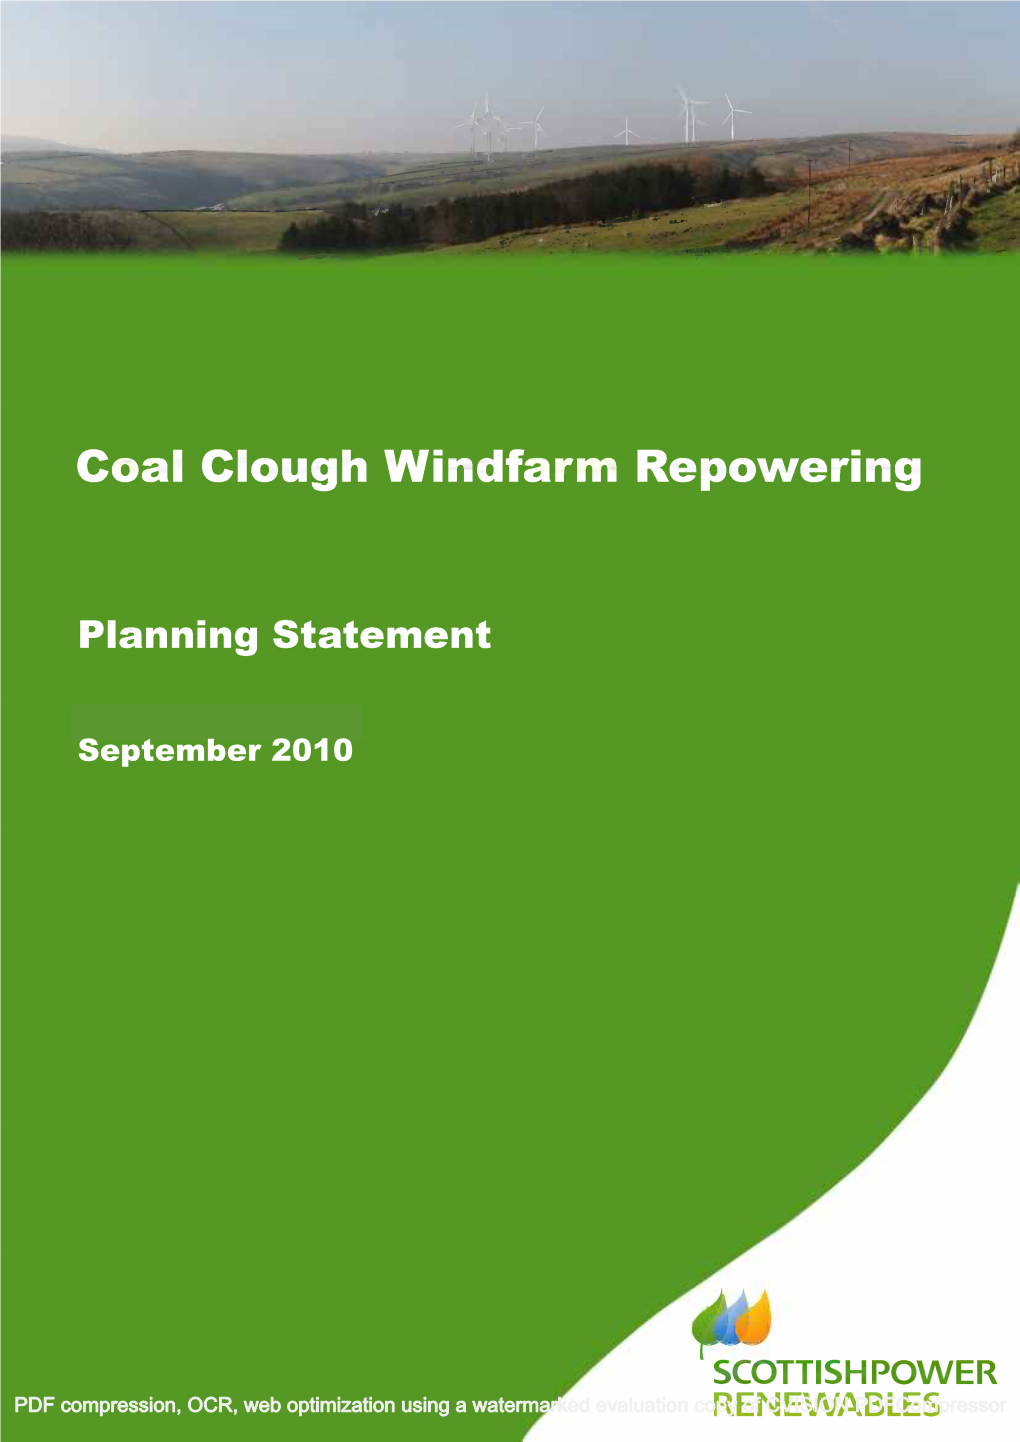 Coal Clough Windfarm Repowering